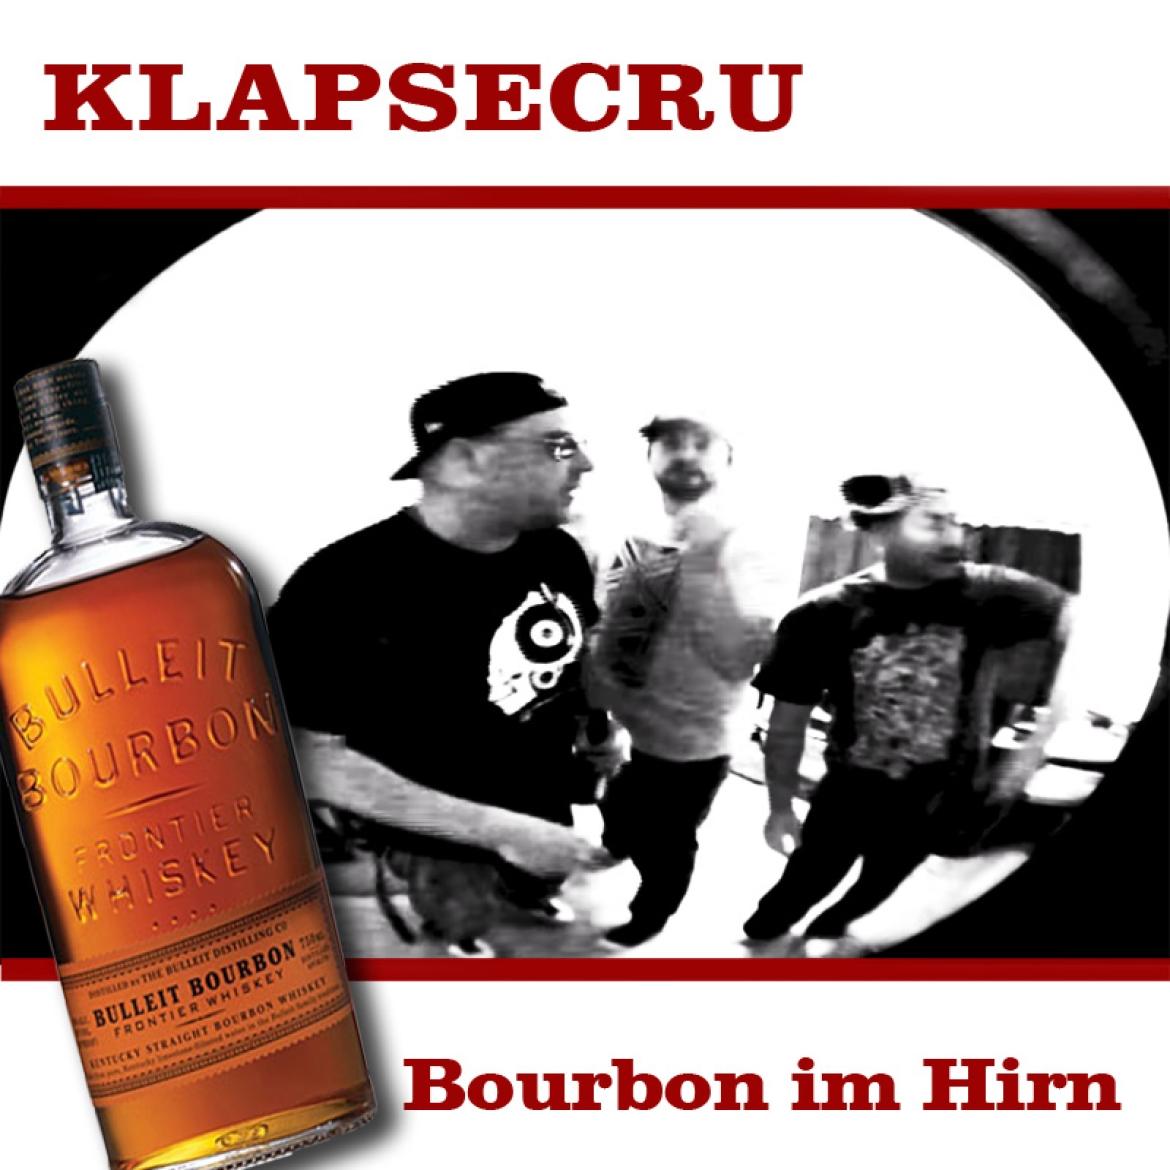 Klapsecru - Bourbon im Hirn